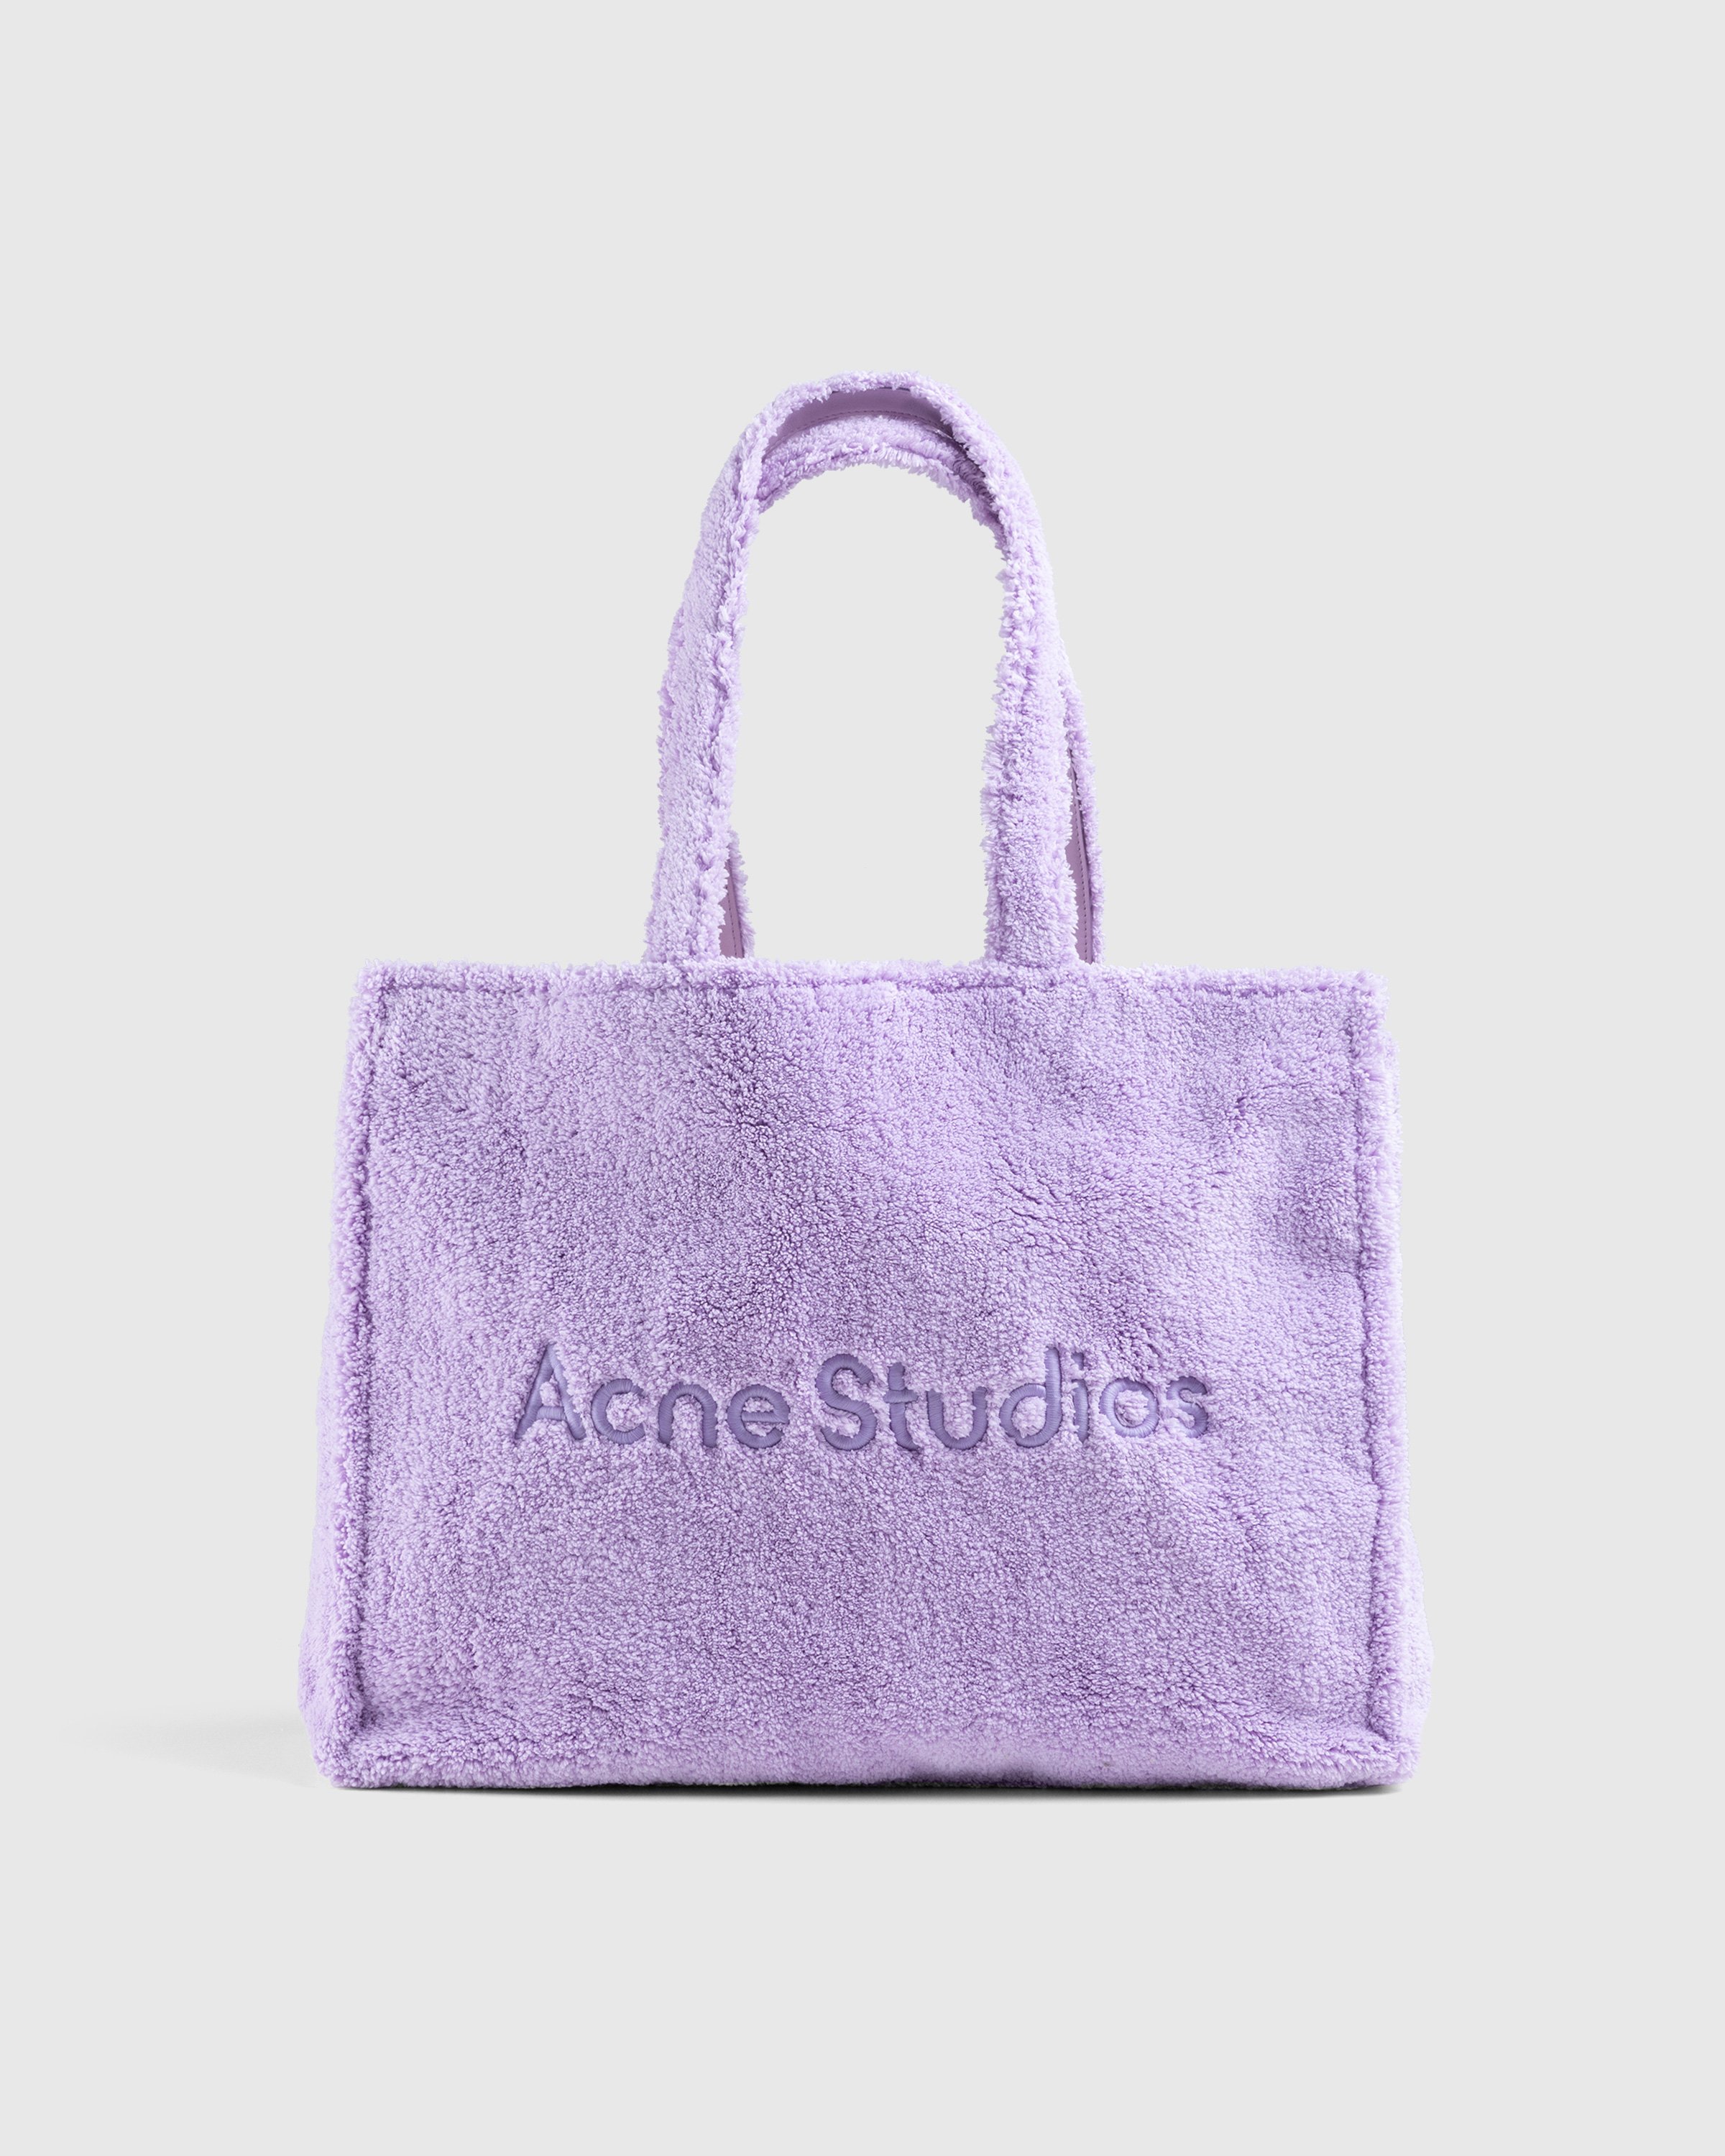 Acne Studios - Furry Logo Shoulder Tote Bag Lilac Purple - Accessories - Purple - Image 1